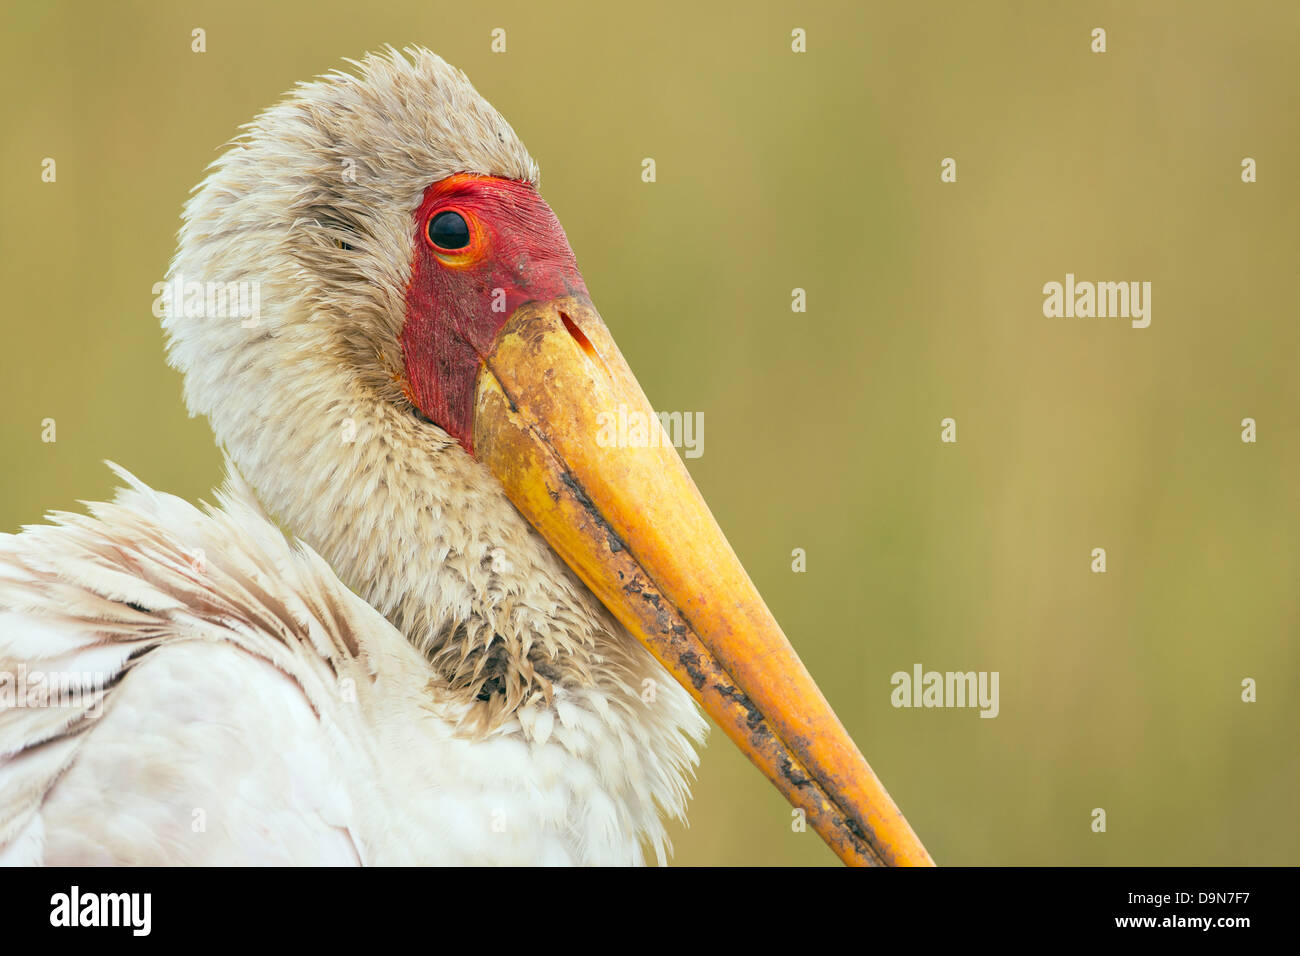 Yellow-billed Stork close up portrait, Masai Mara, Kenya Stock Photo